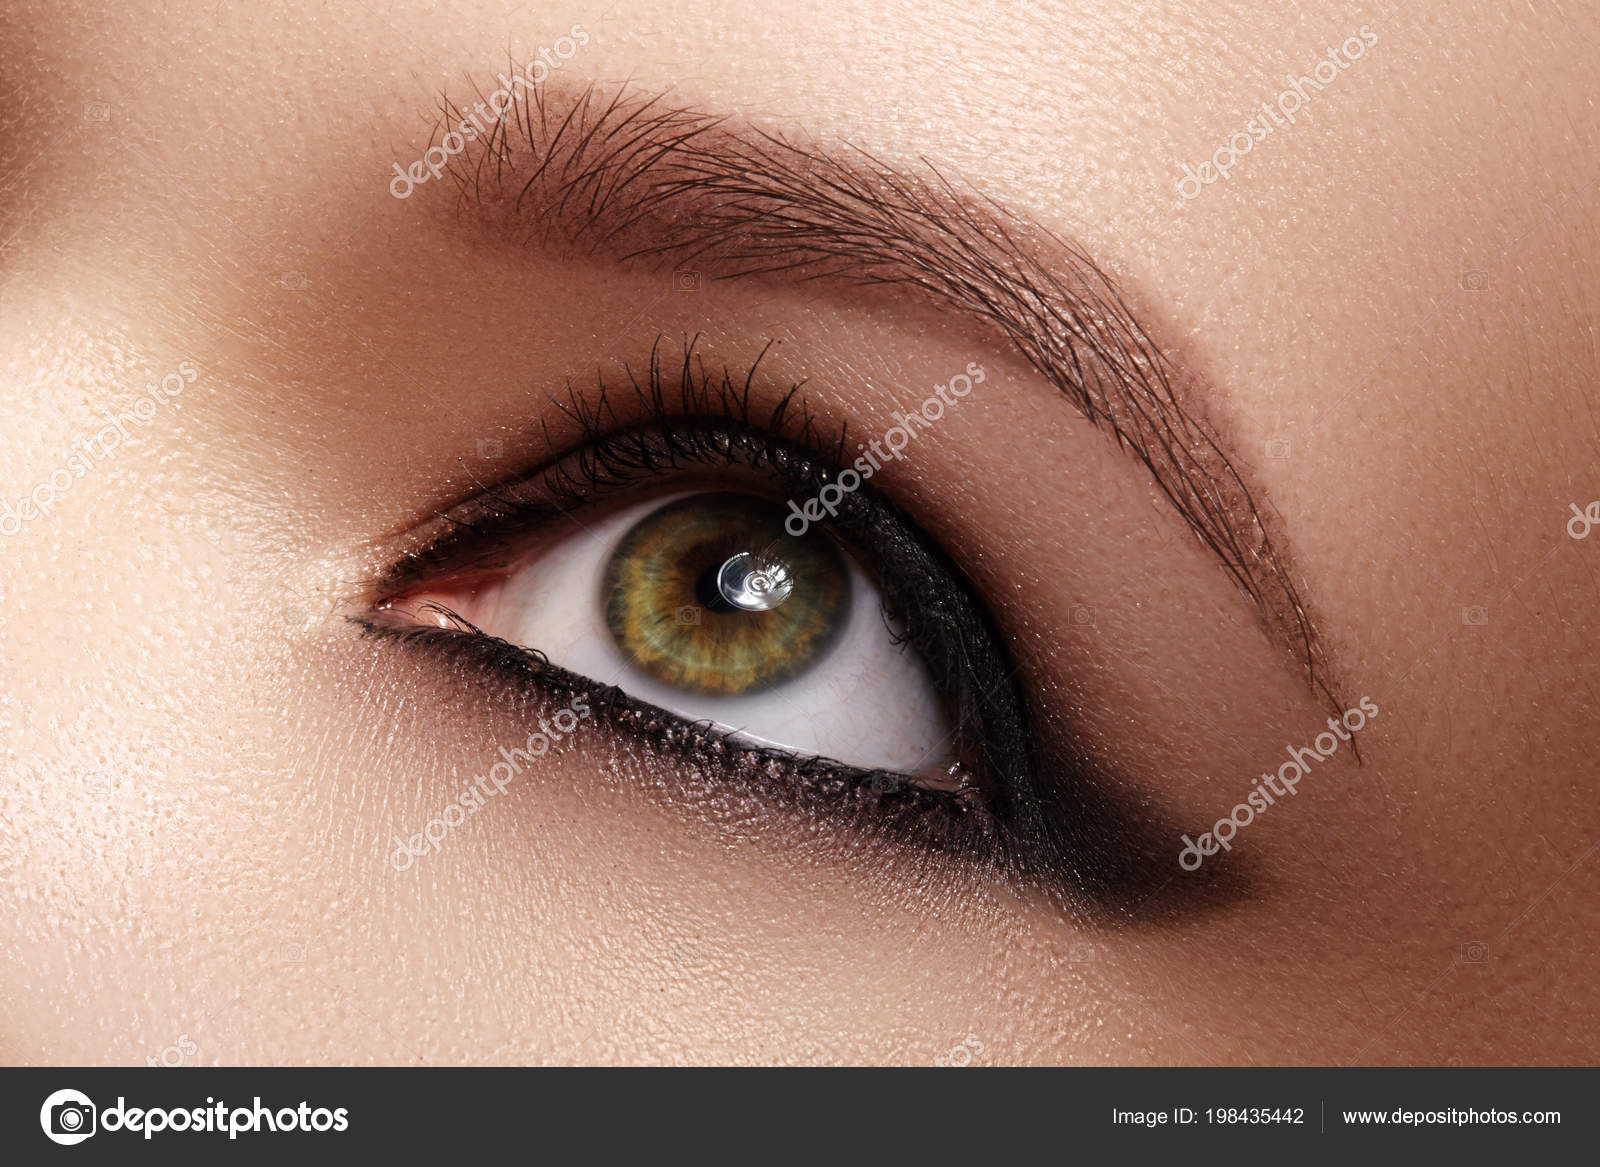 Great Eye Makeup Closeup Female Eye Dark Make Great Shapes Brows Celebrate Makeup